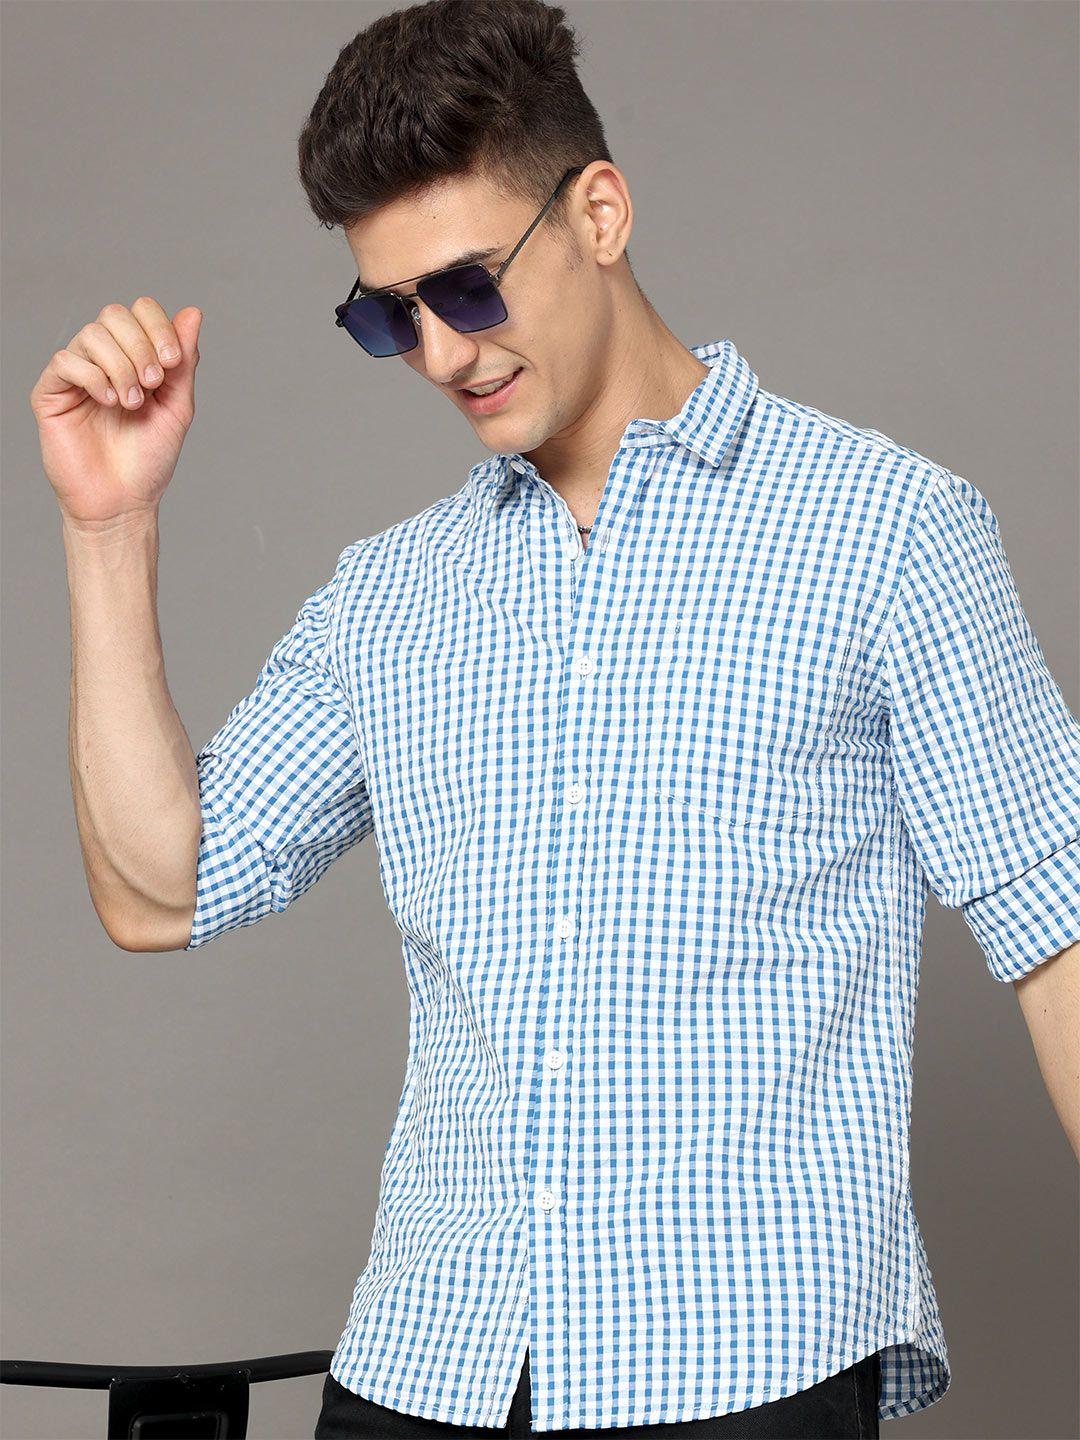 moda rapido blue & white gingham checked spread collar cotton slim fit casual shirt